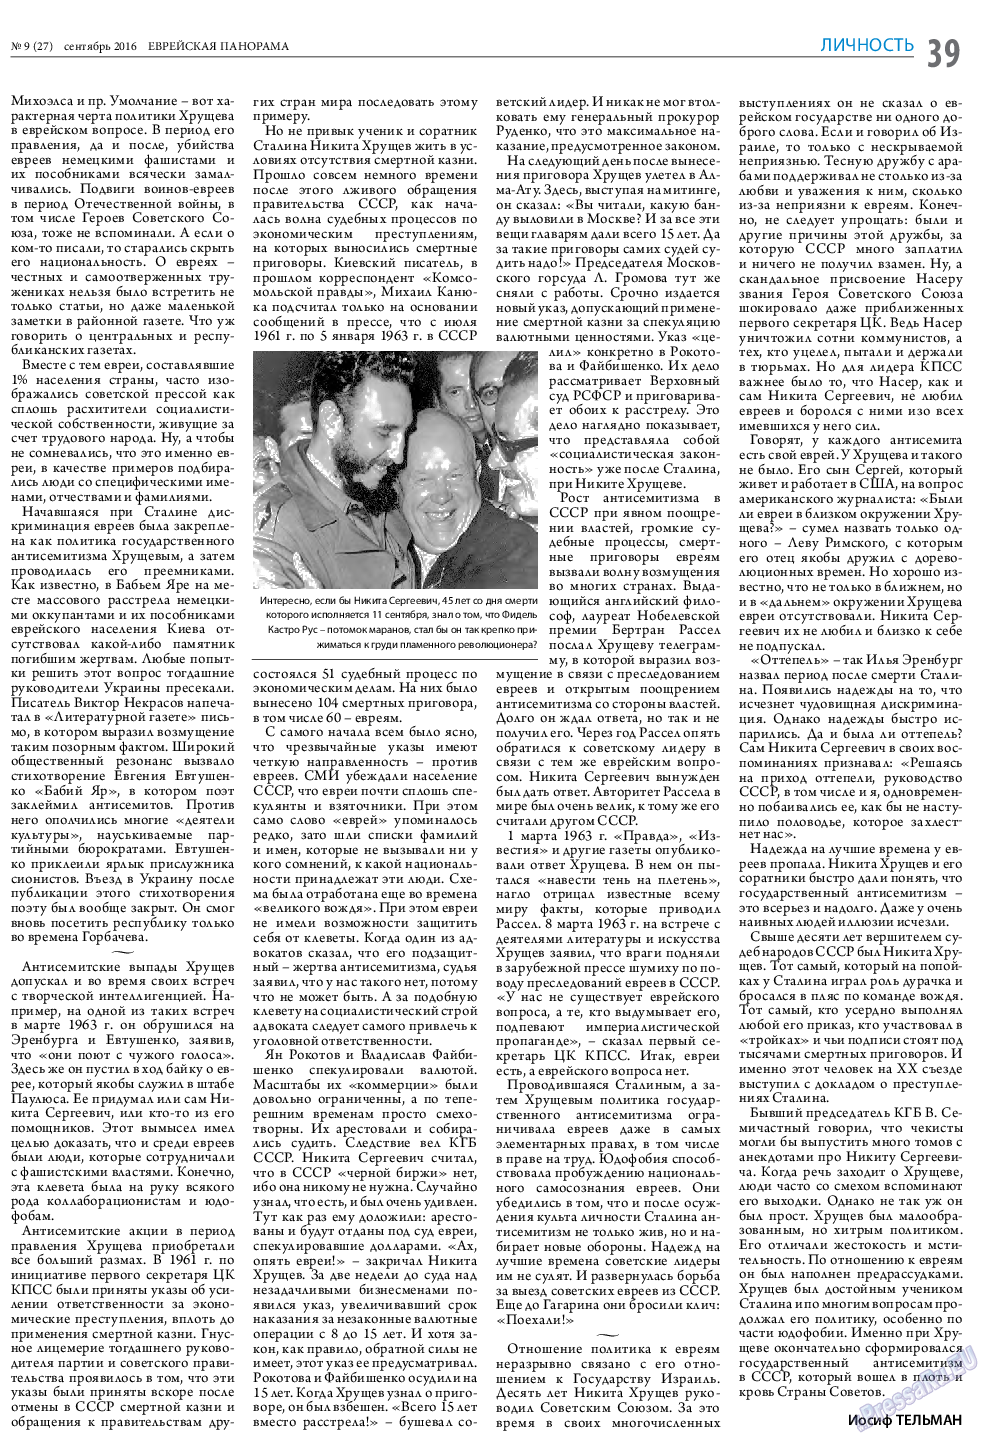 Еврейская панорама, газета. 2016 №9 стр.39